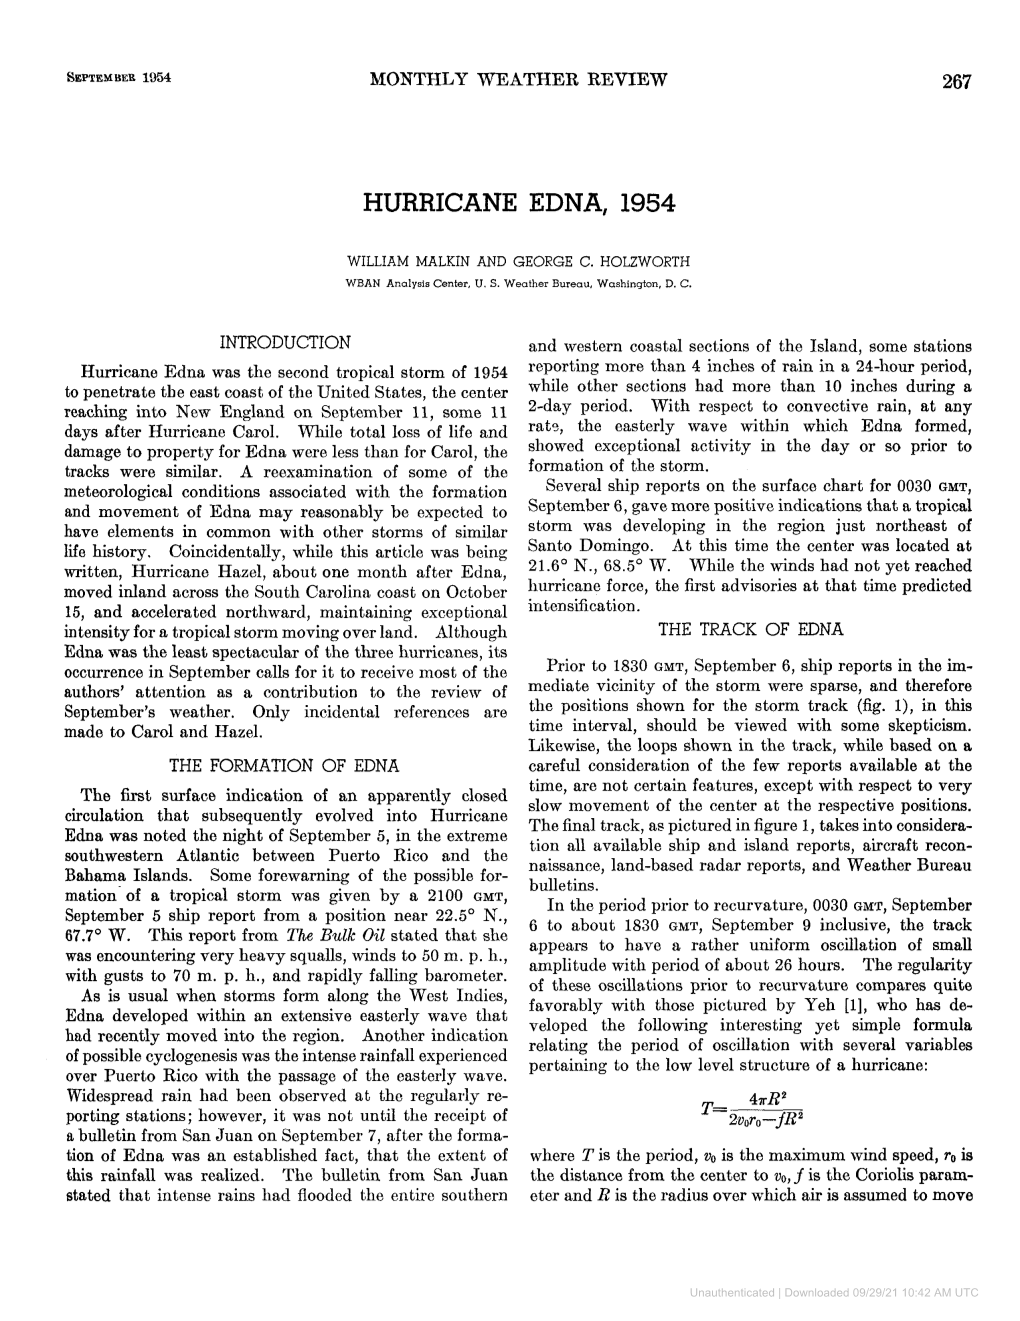 Hurricane Edna, 1954